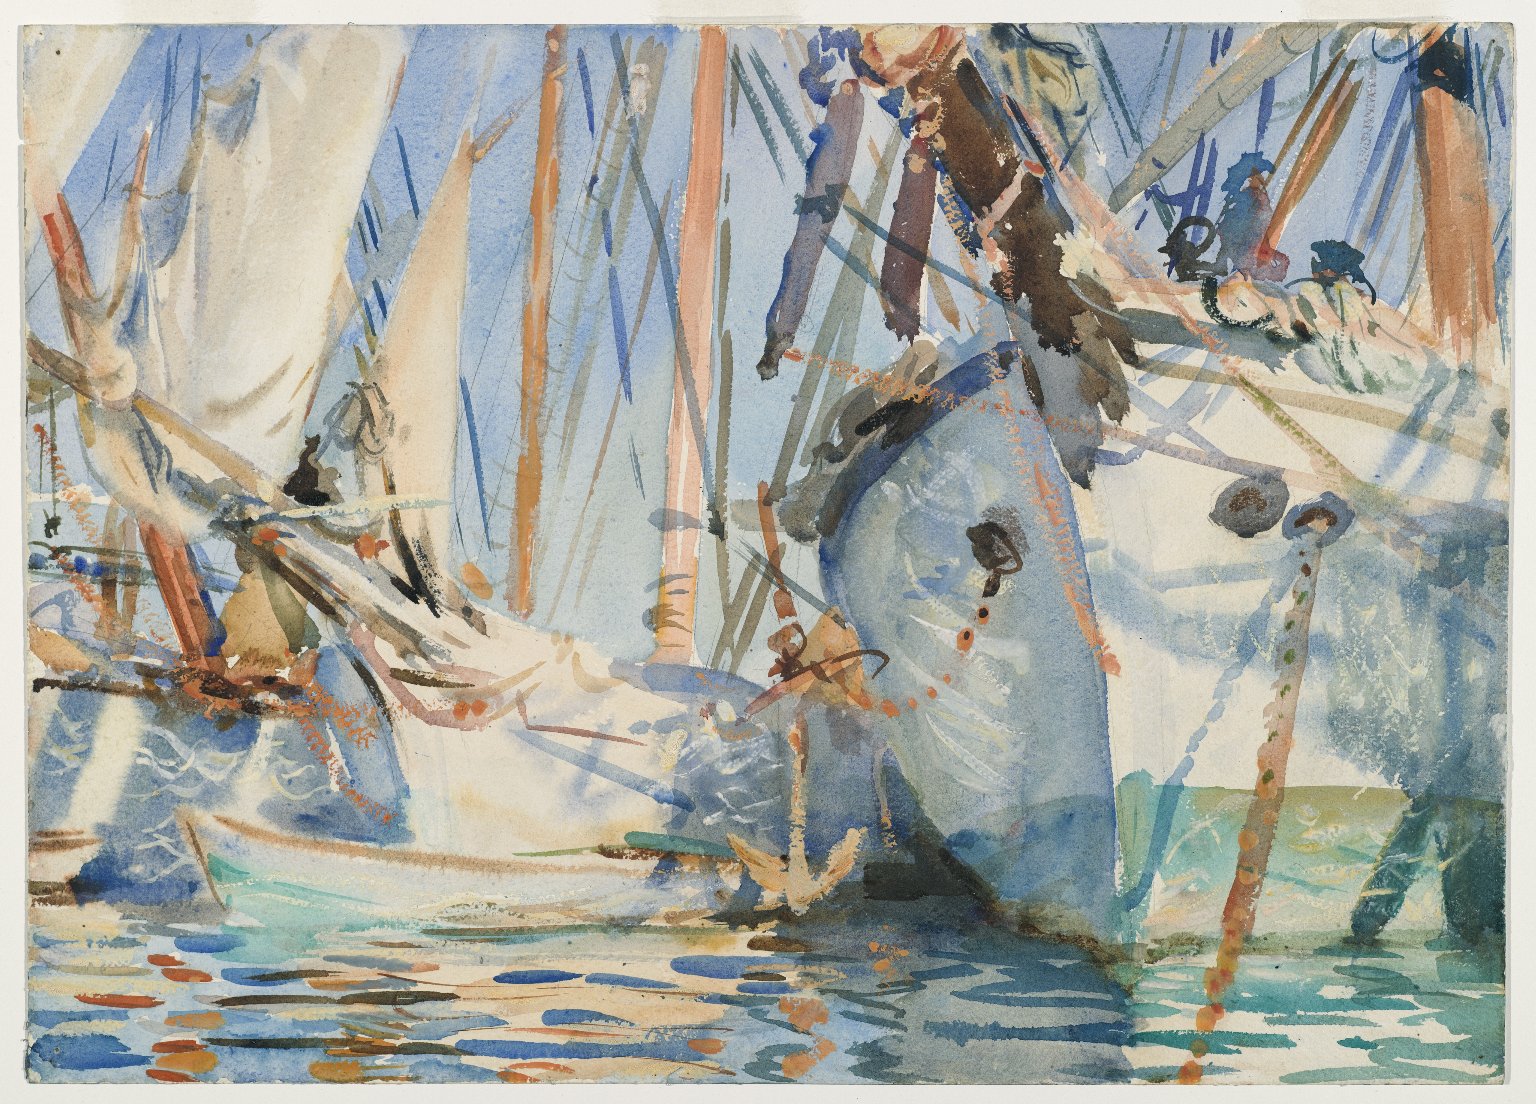 Bílé lodě by John Singer Sargent - 1908 - 35,2 x 49,2 cm 